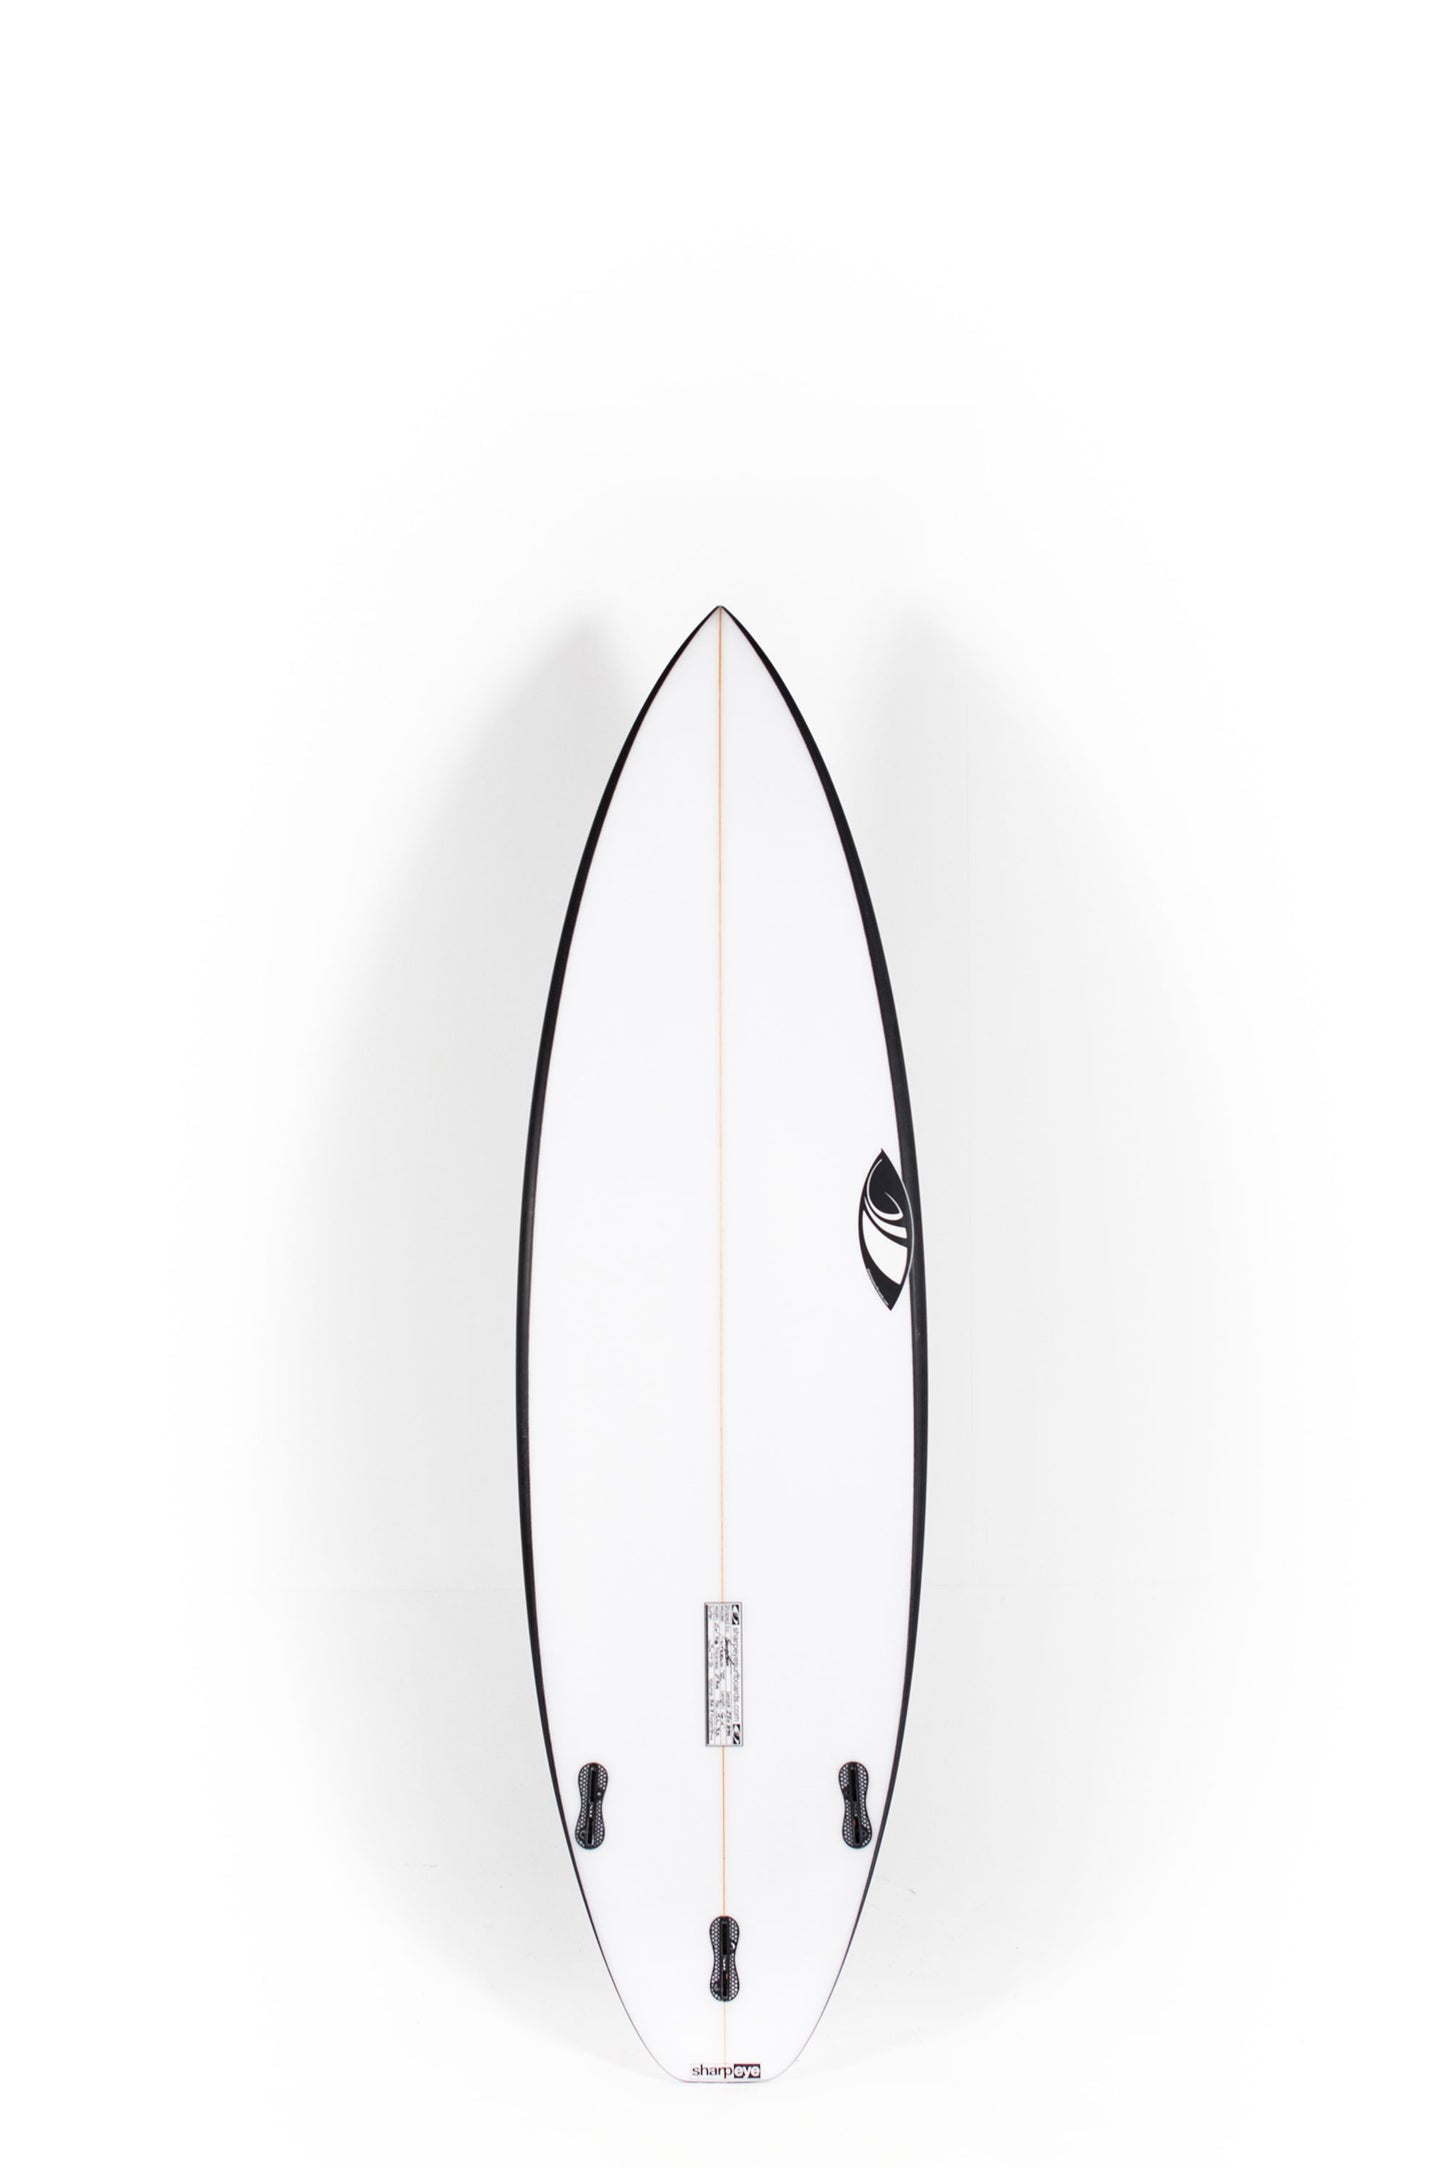 Sharp Eye Surfboards - INFERNO 72 by Marcio Zouvi 6'4